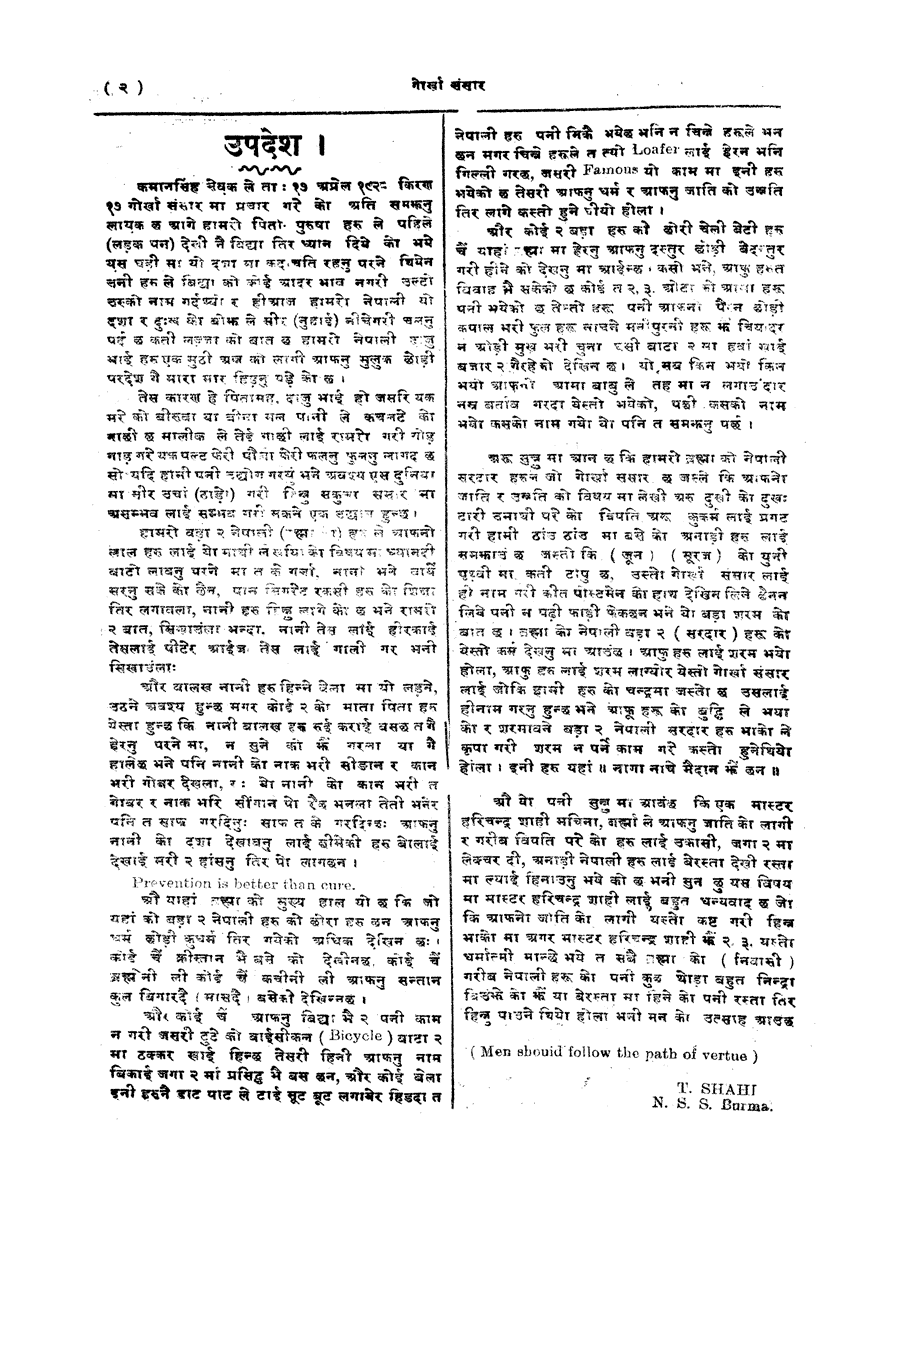 Gorkha Sansar, 8 June 1928, page 2